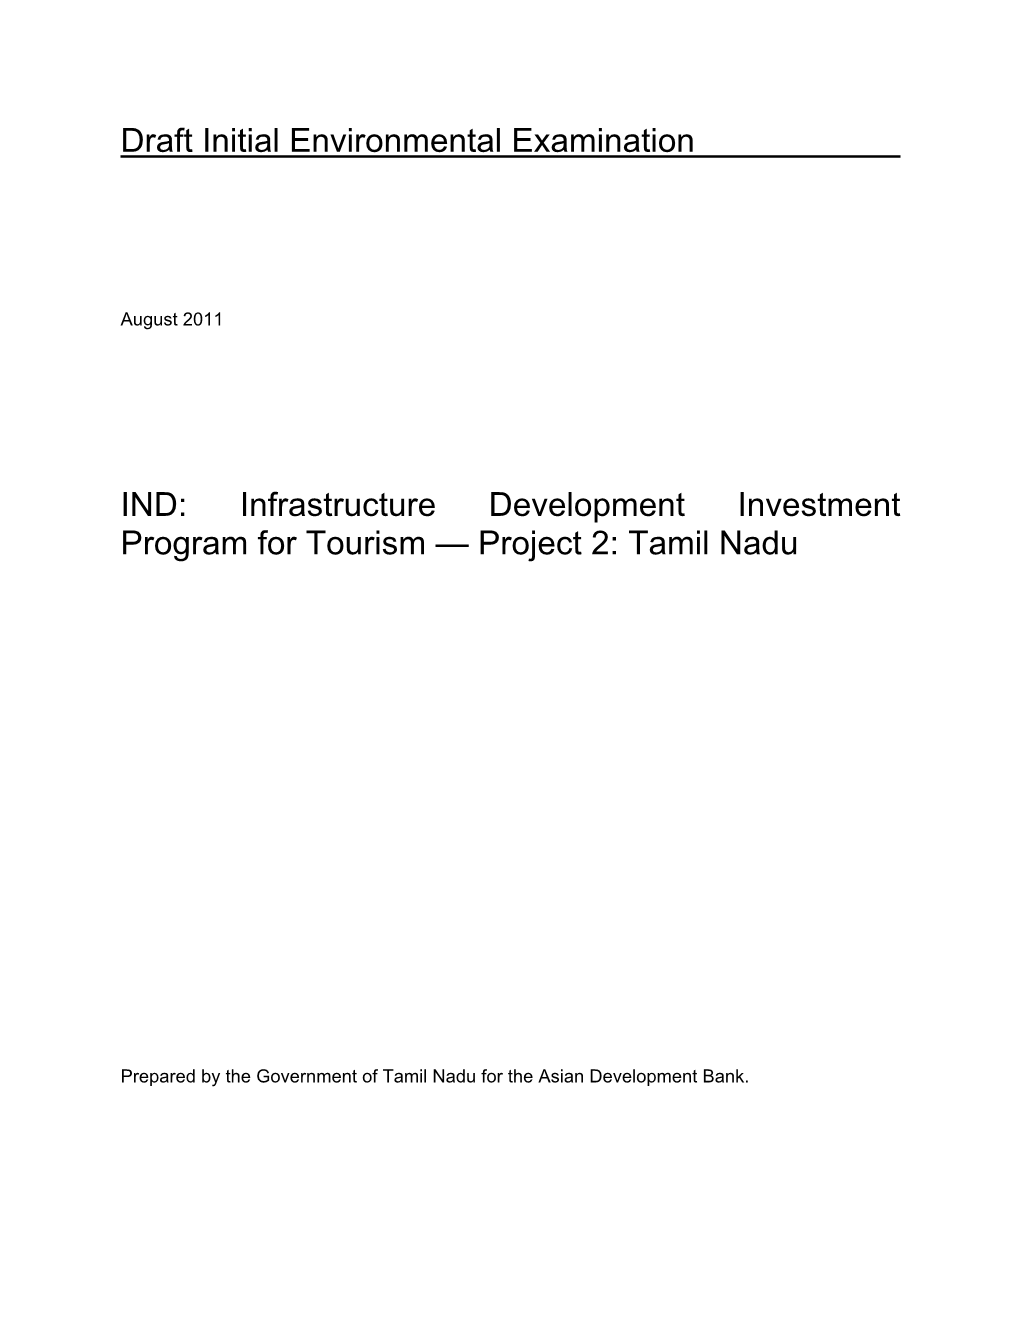 IND: Infrastructure Development Investment Program for Tourism — Project 2: Tamil Nadu